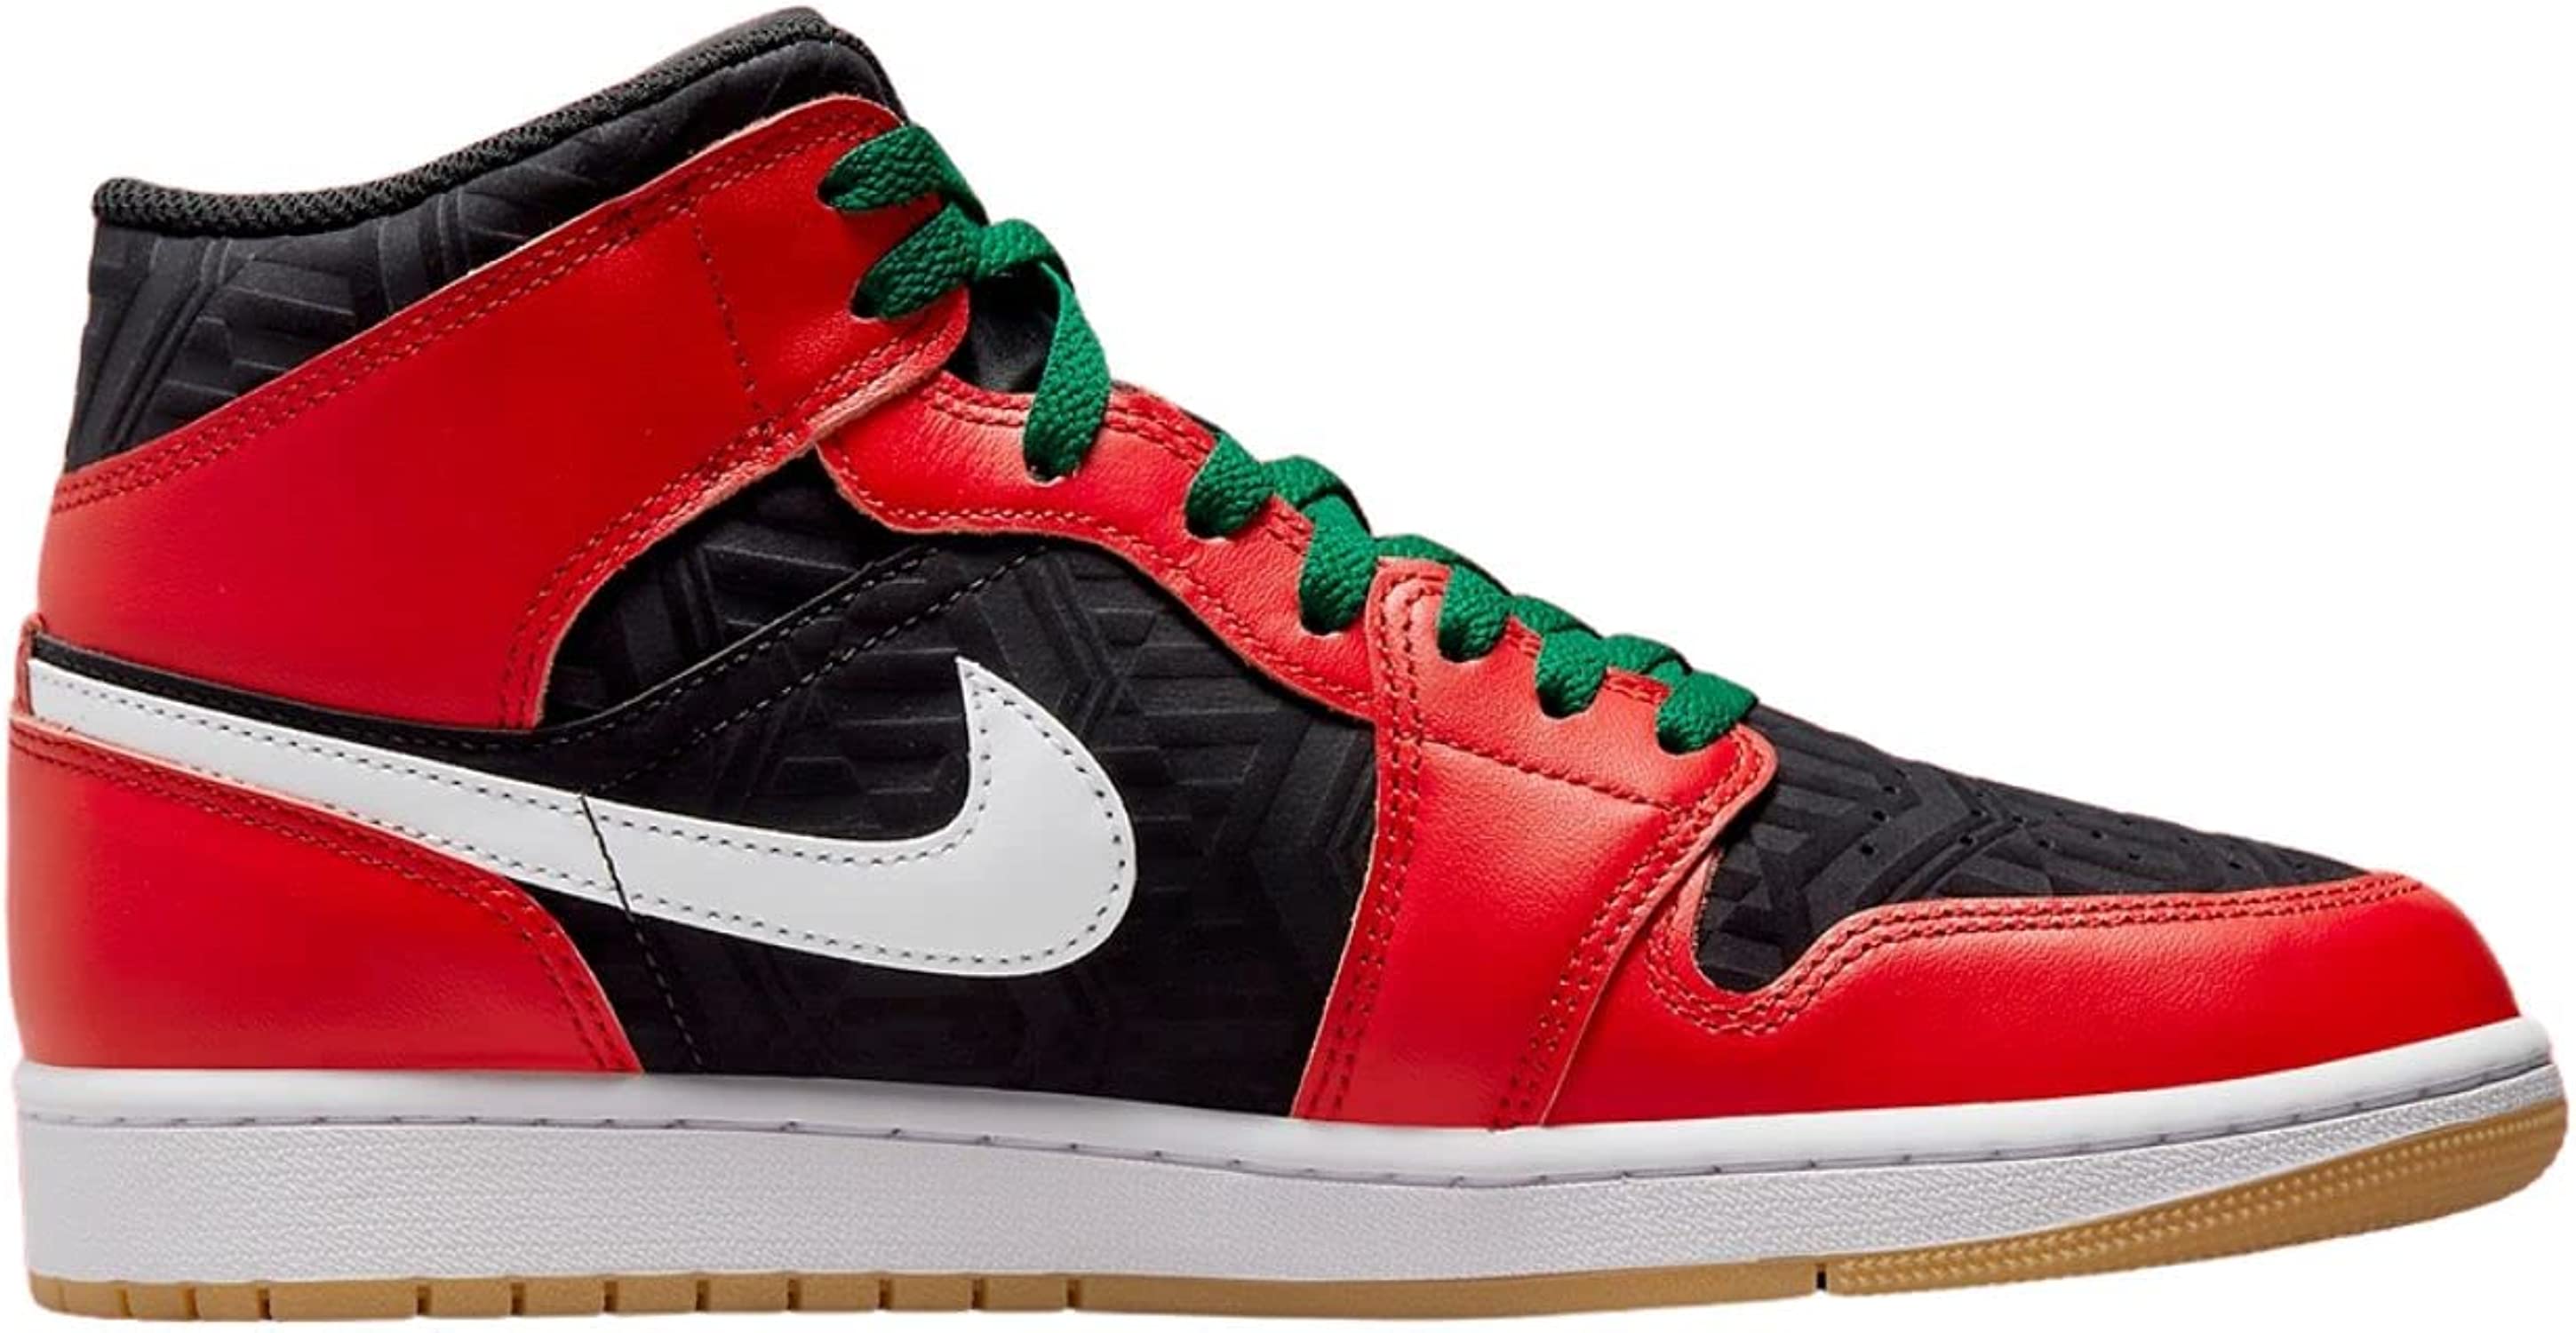 Jordan Mens Air Jordan 1 Mid Shoes,Black/White/Malachite/Fire Red